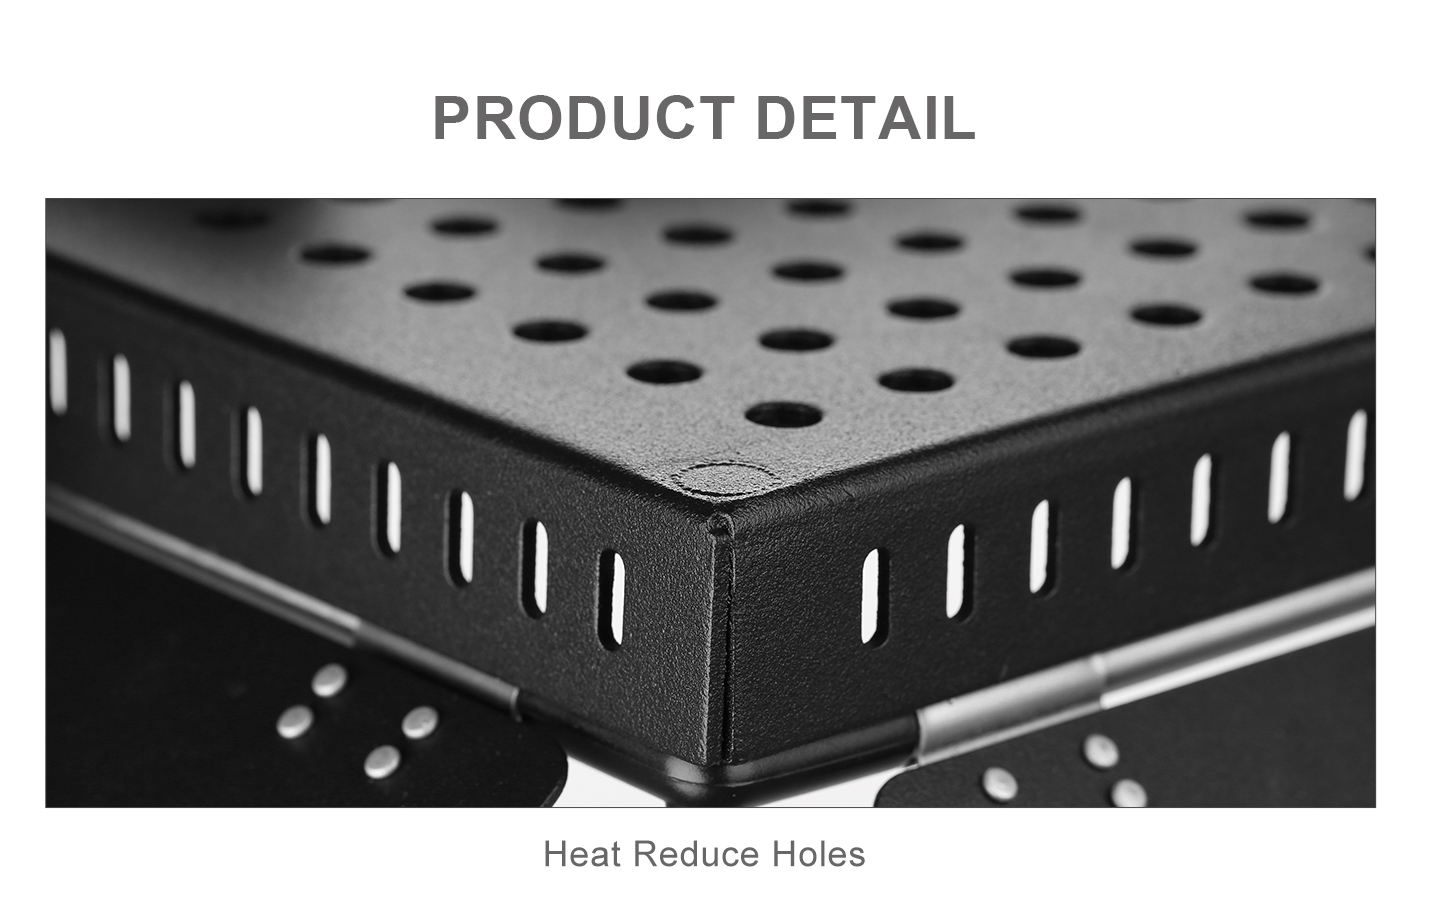 Heat Reduce Holes